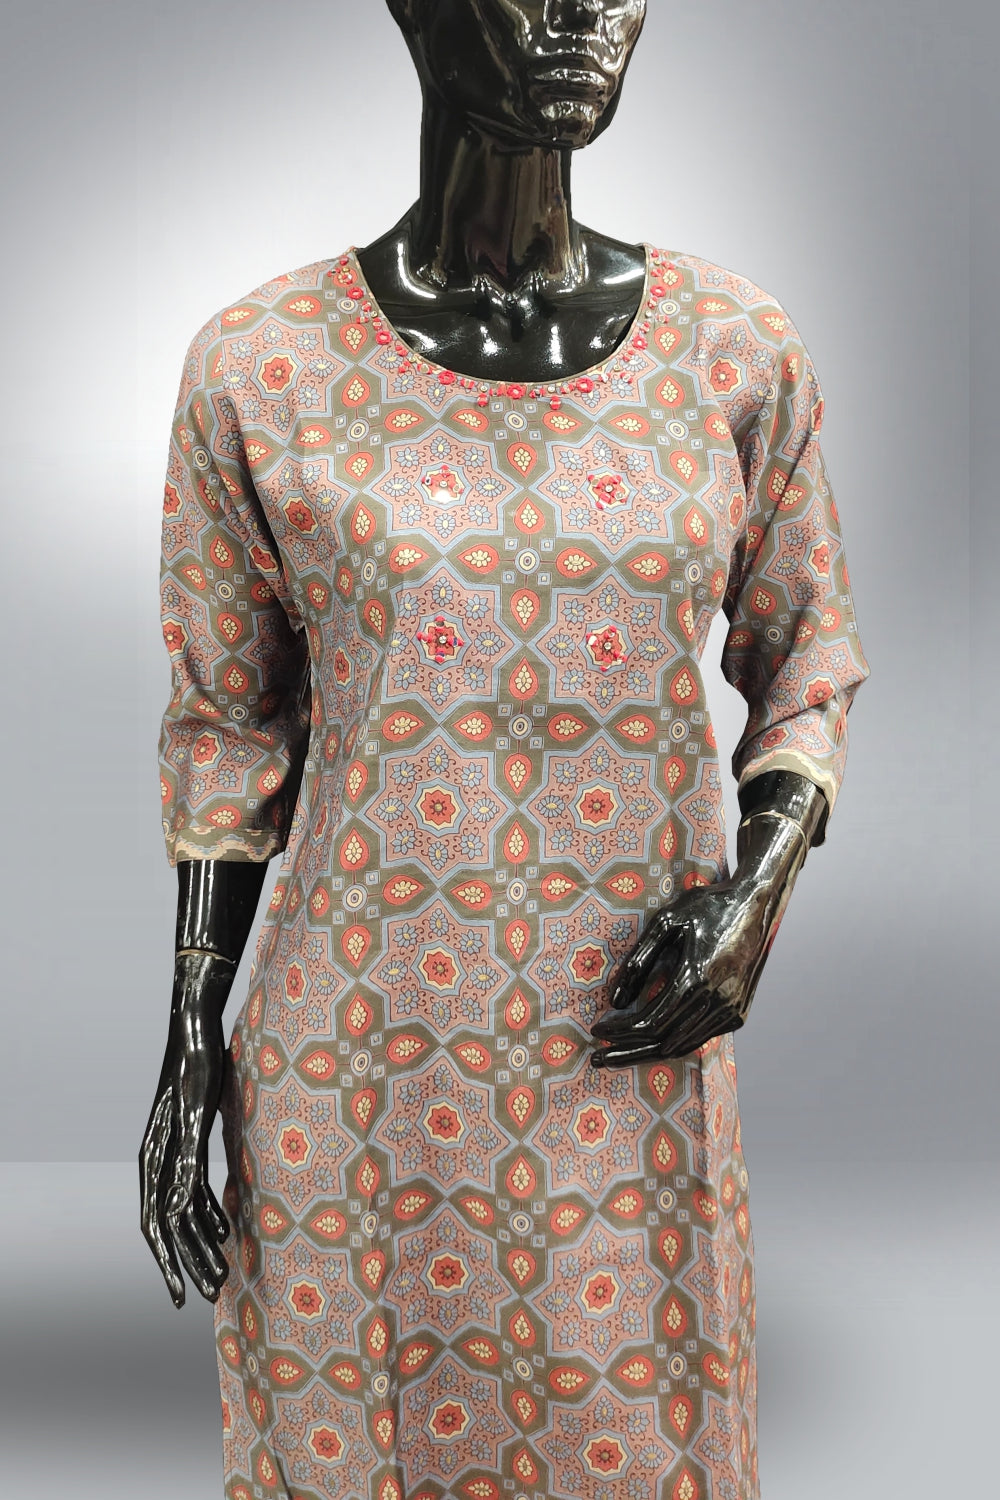 Combo of 3 Medium Straight Cut Salwar Suits